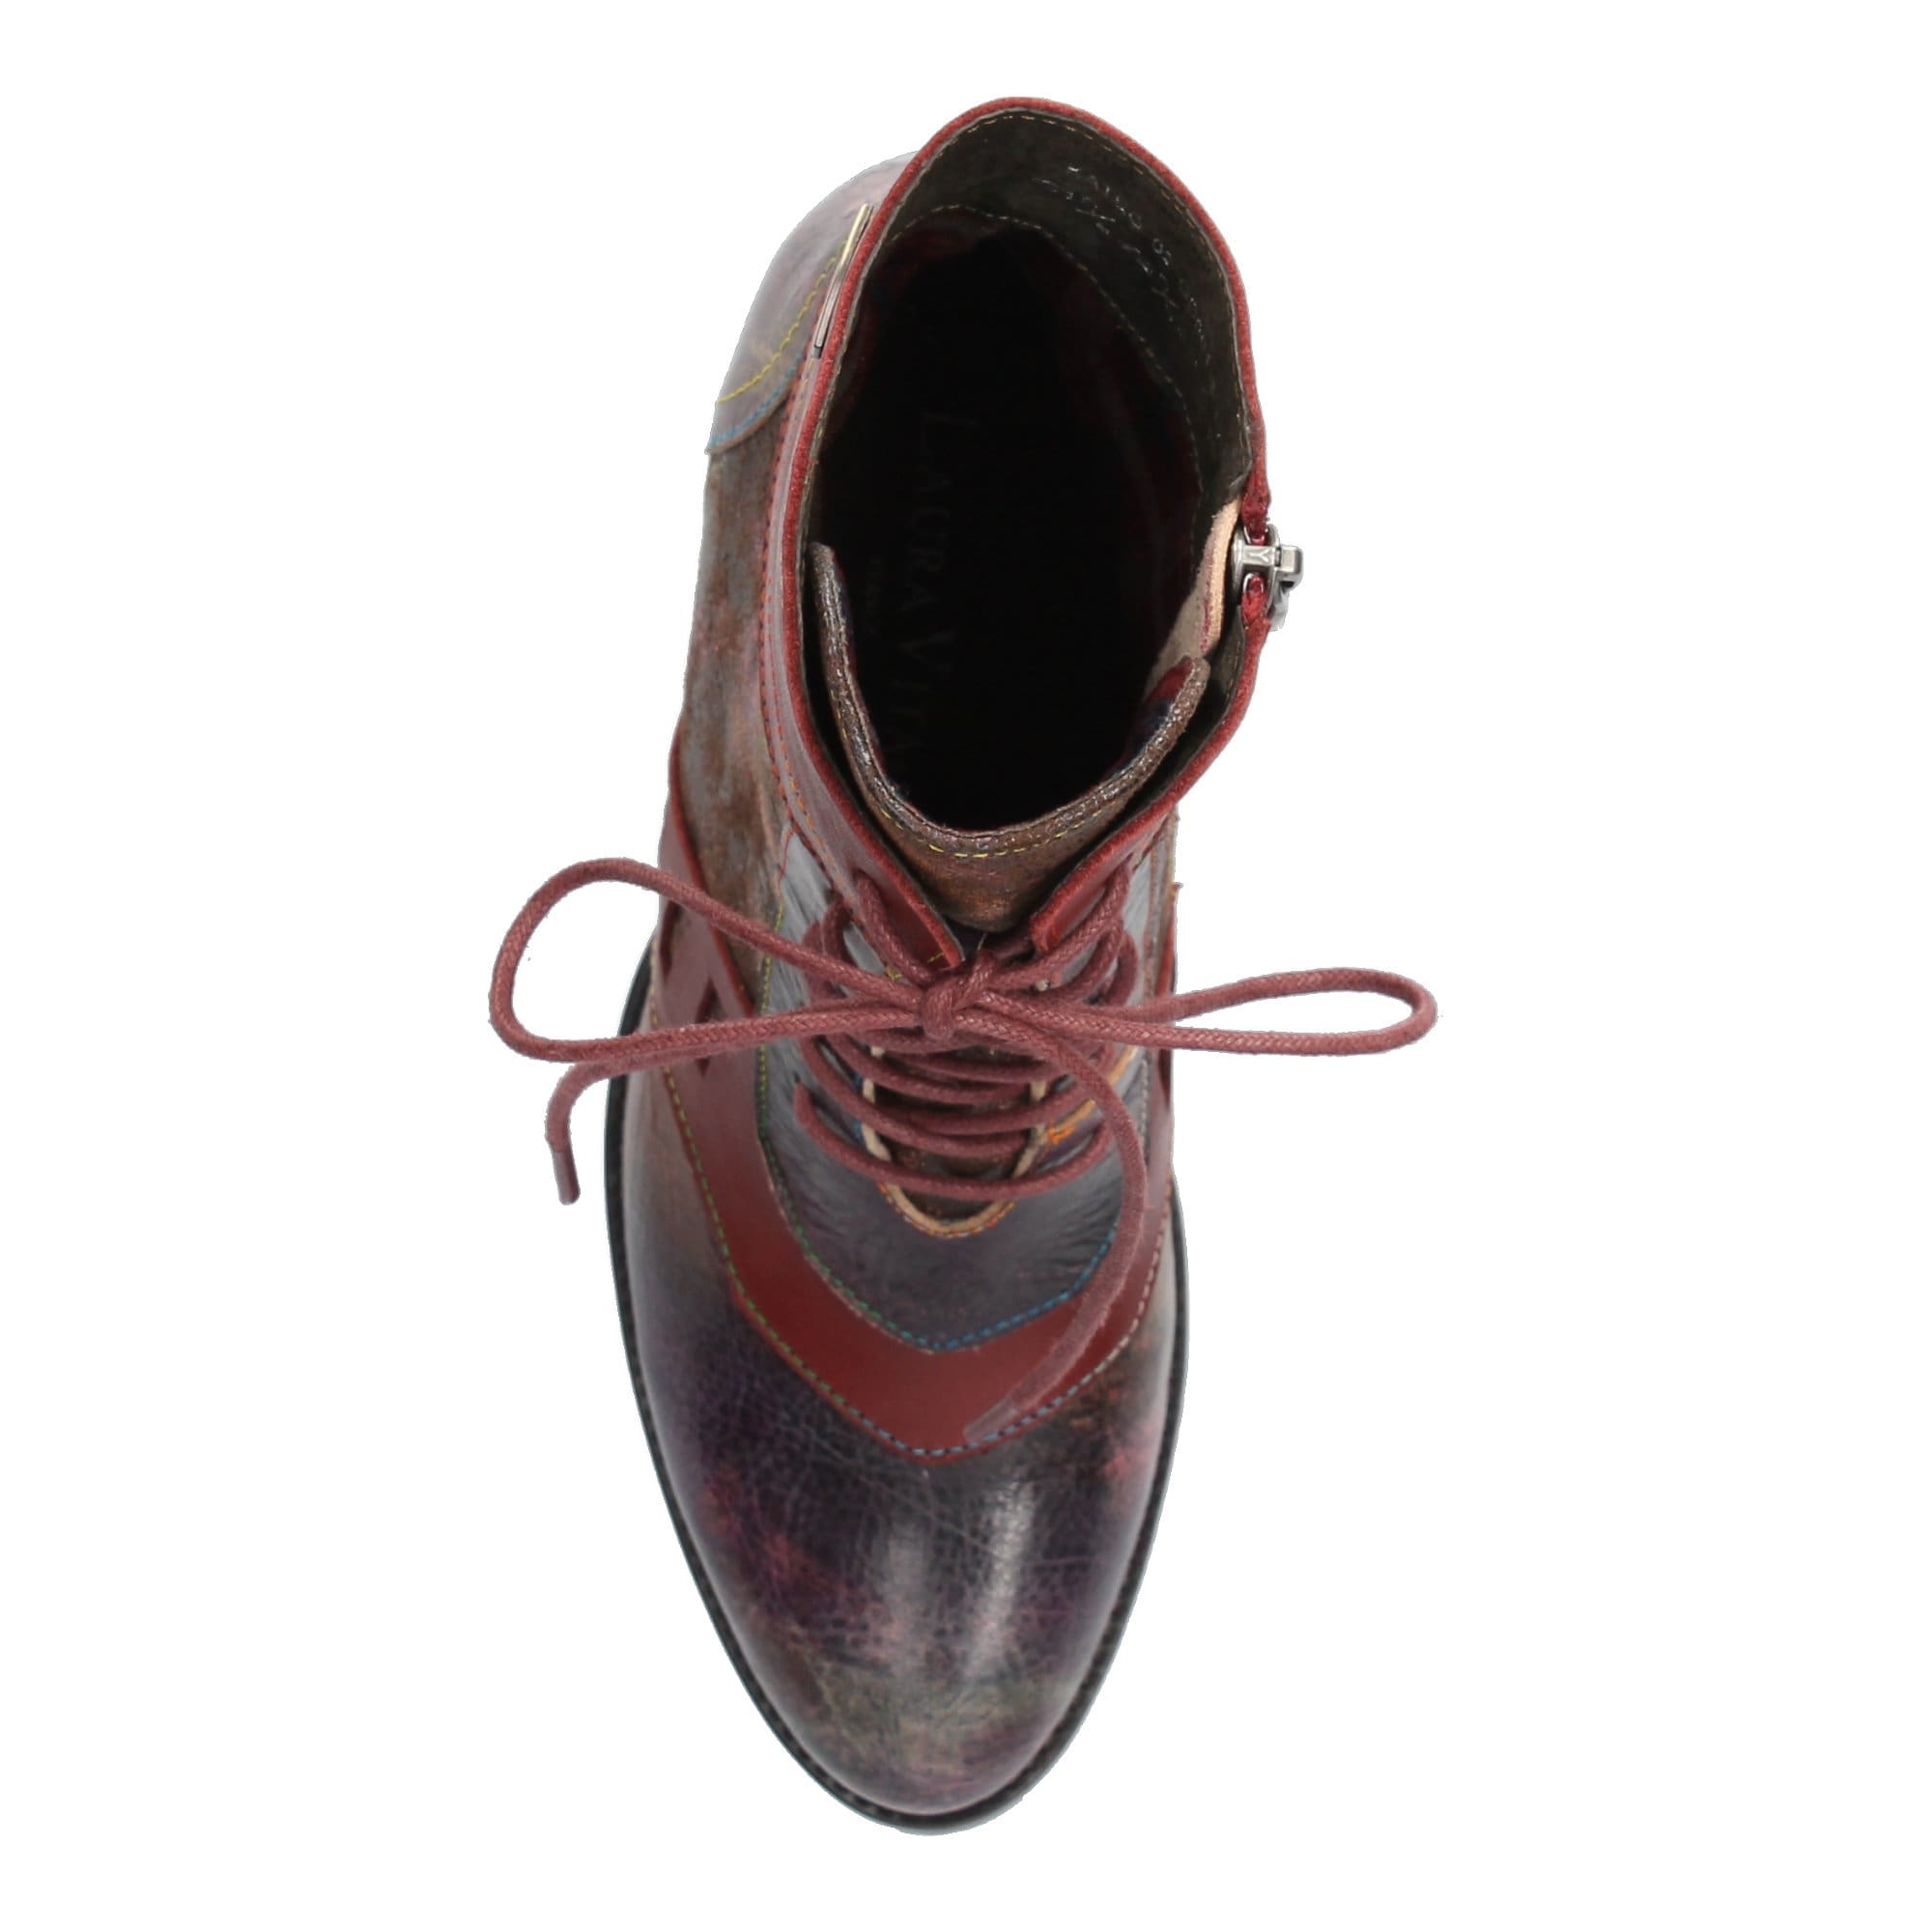 Shoe KATEO 02 - Boots